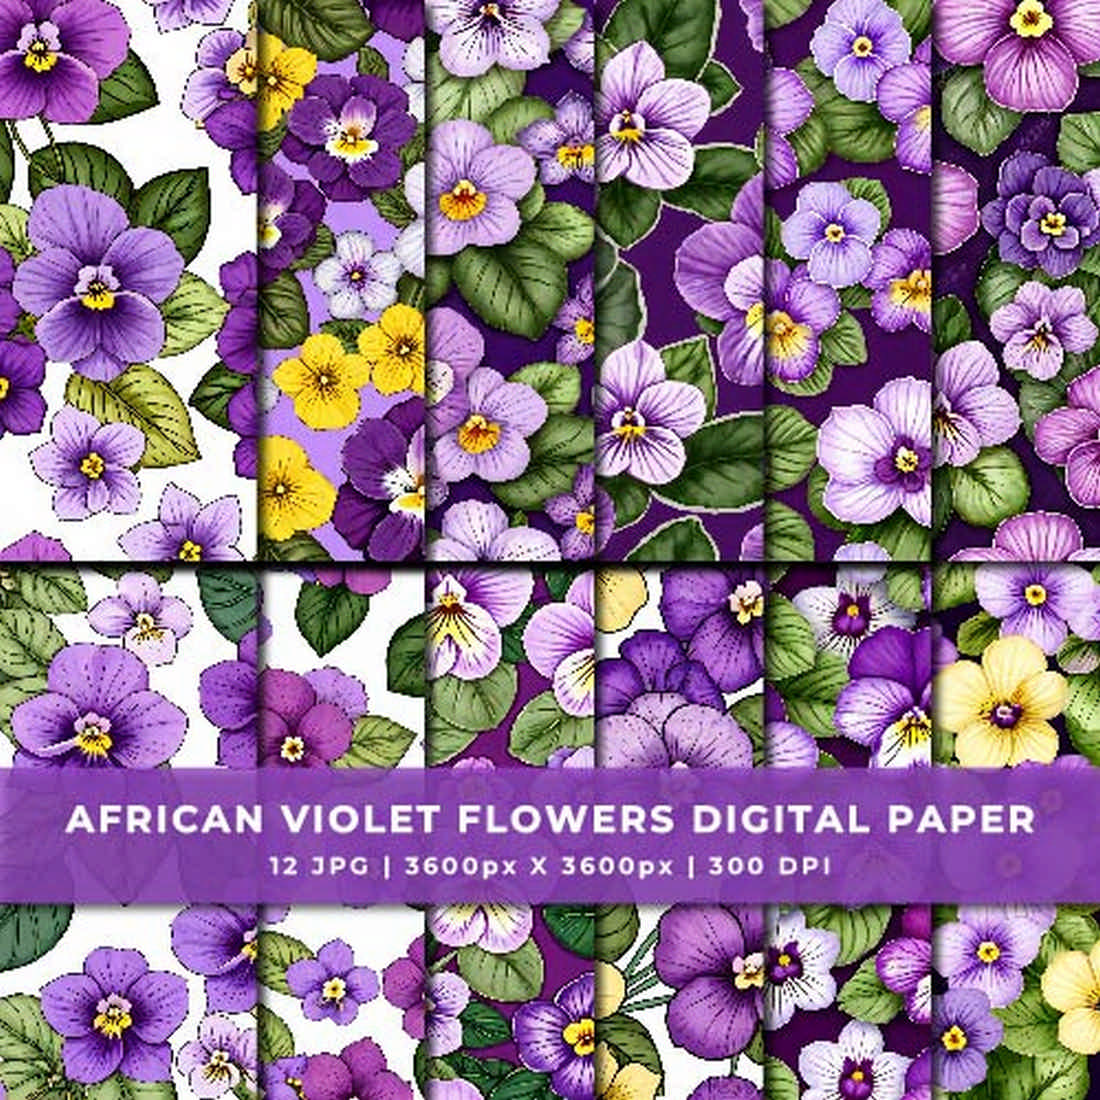 African Violet Flowers Digital Paper cover image.